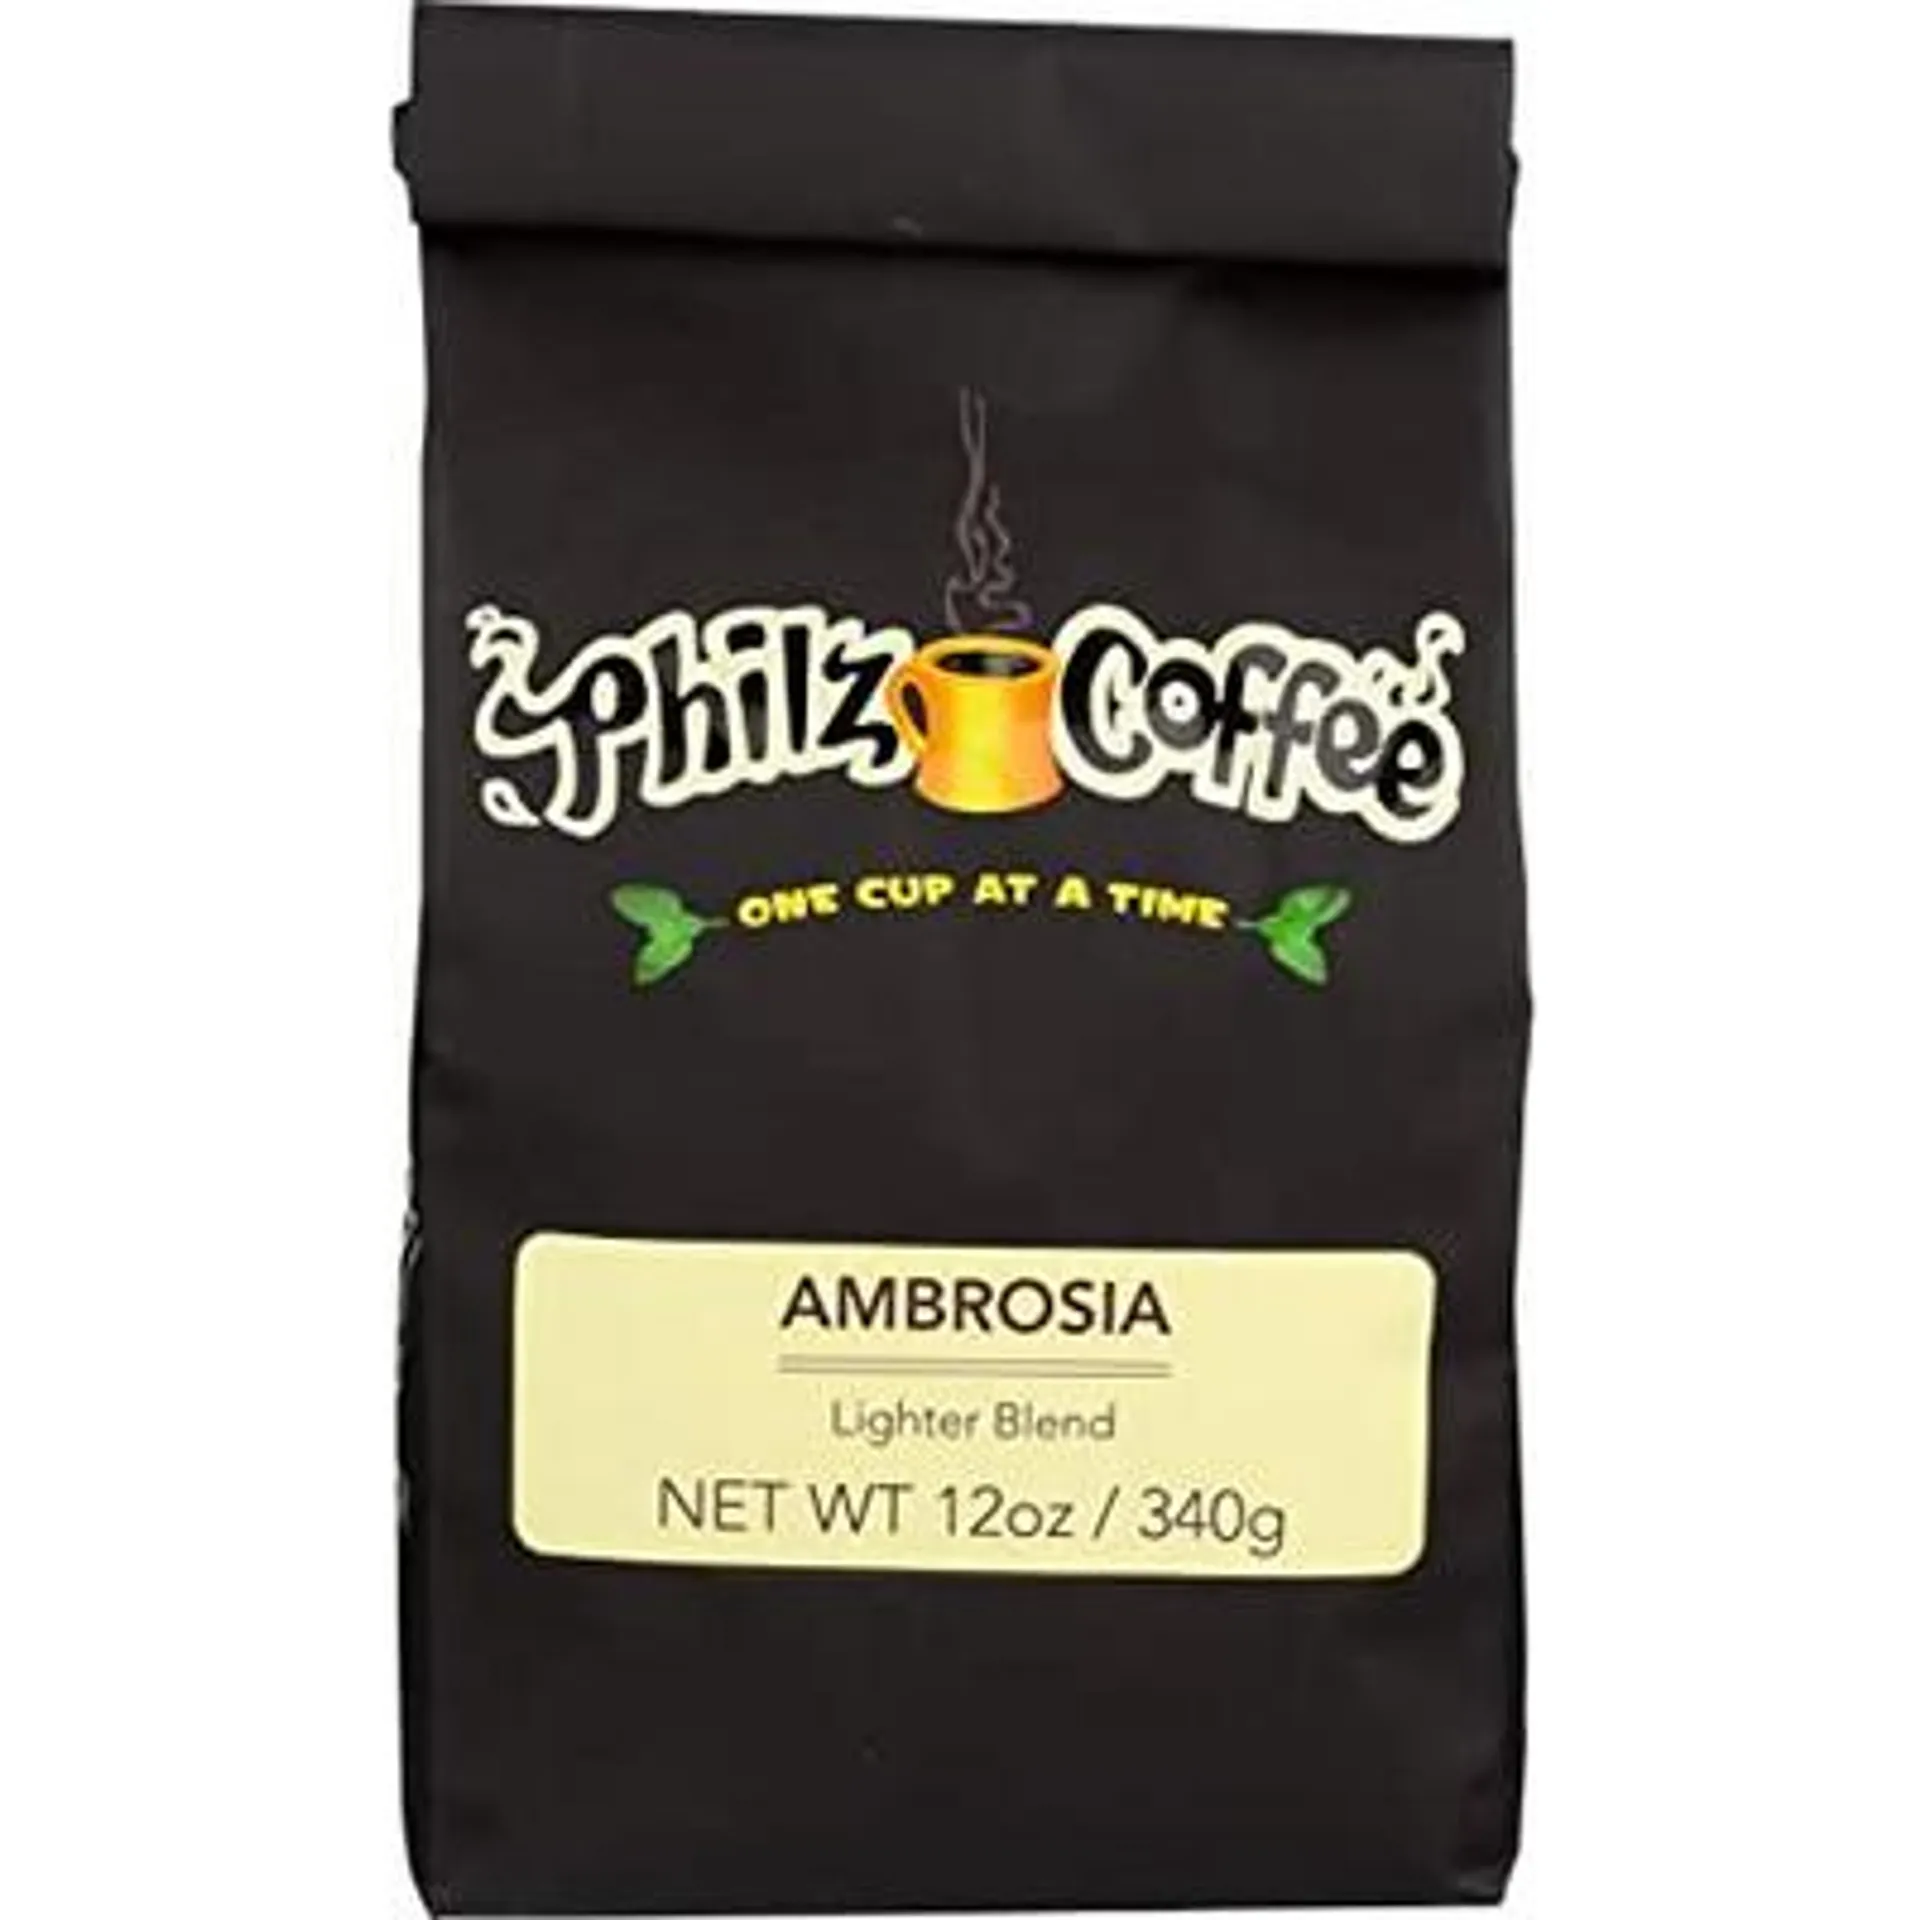 Philz Coffee Ambrosia Lighter Blend Whole Bean Coffee